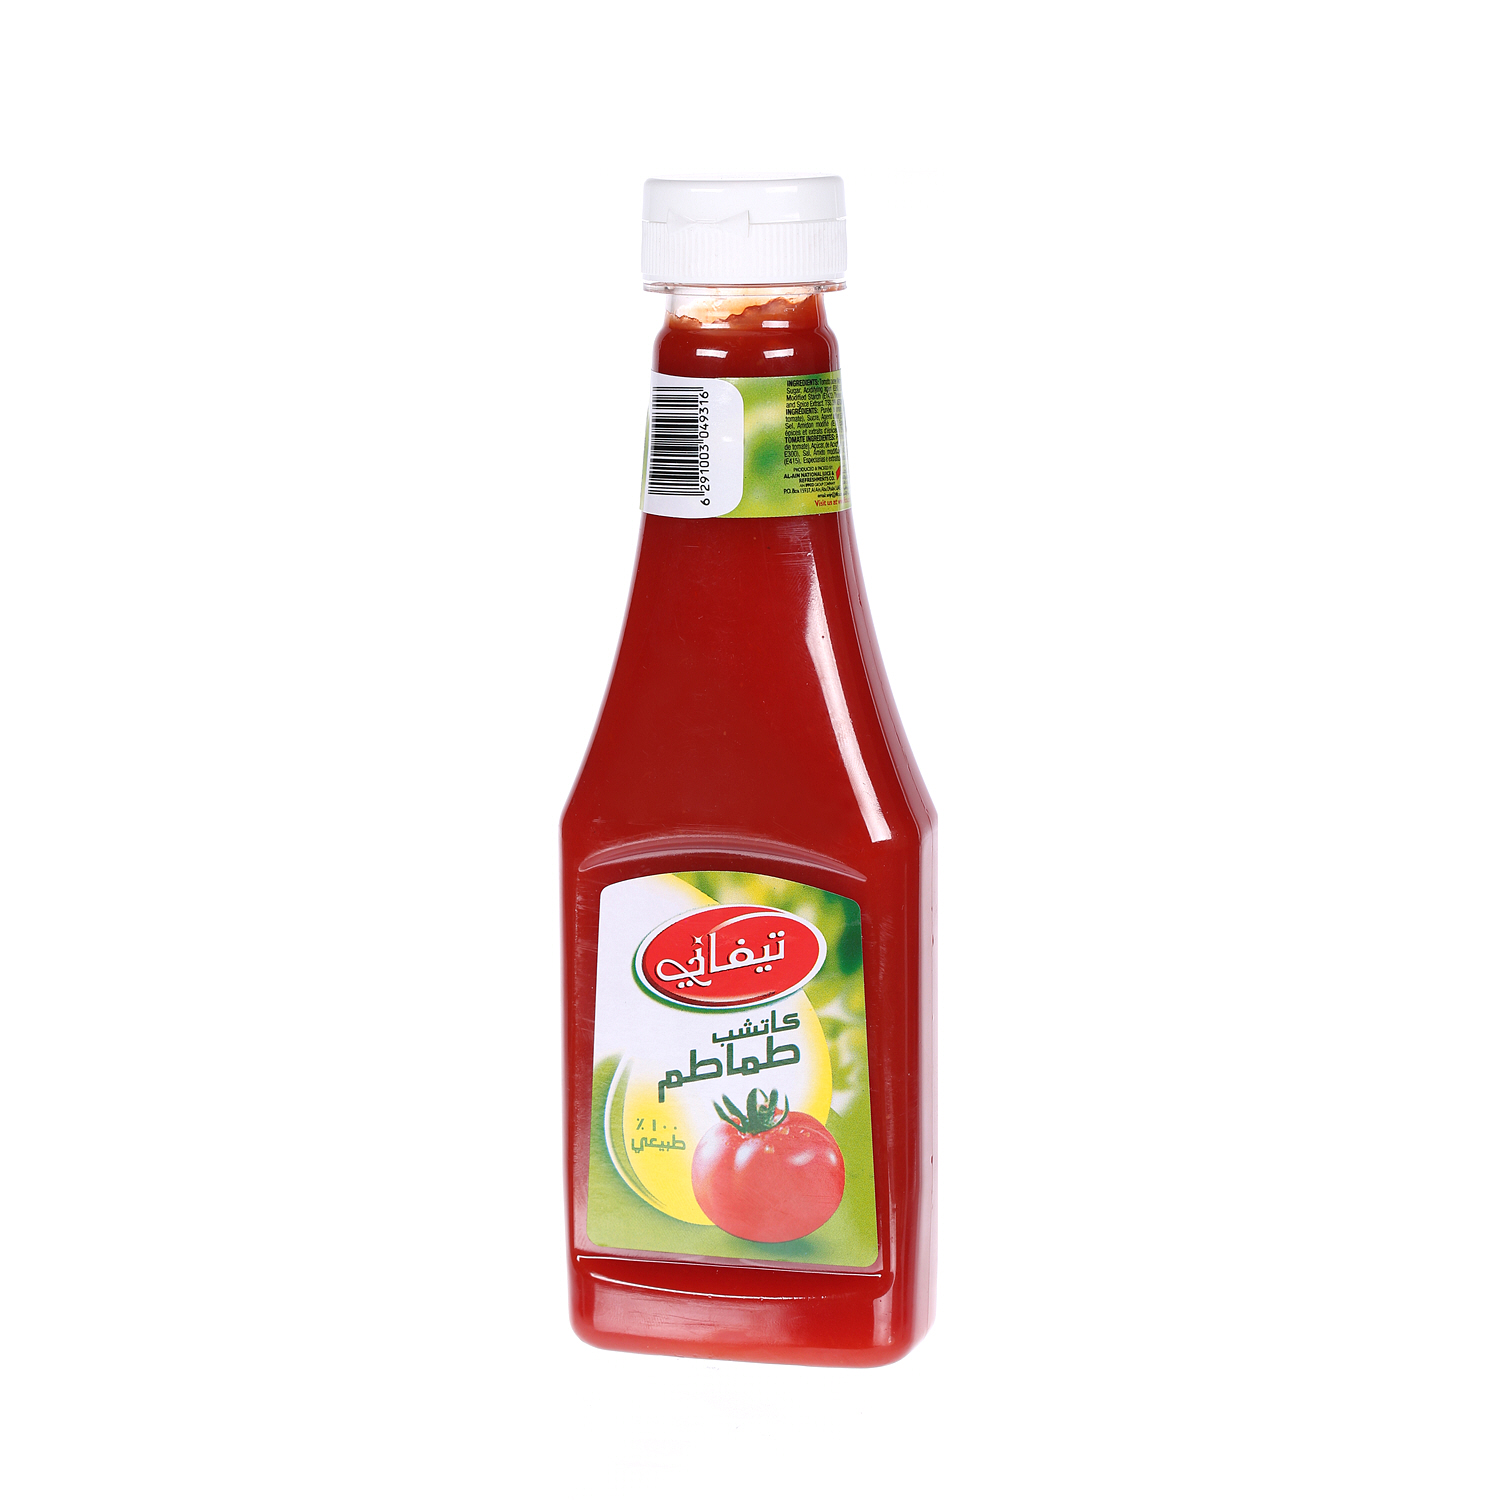 Tiffany Tomato Ketchup Plastic Bottle 340 g